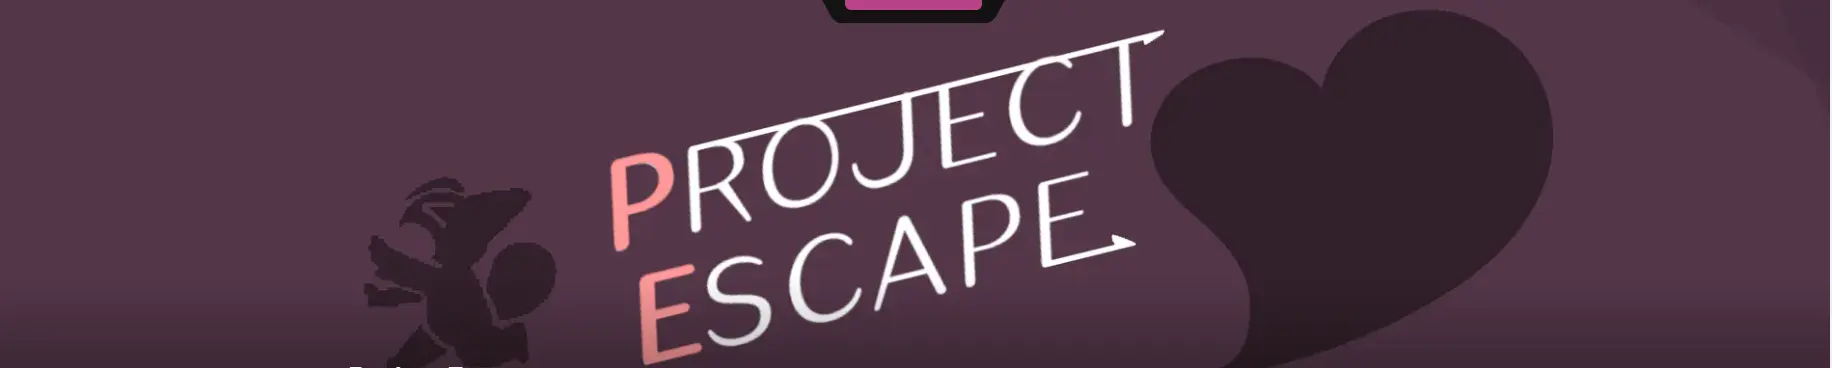 Project Escape main image